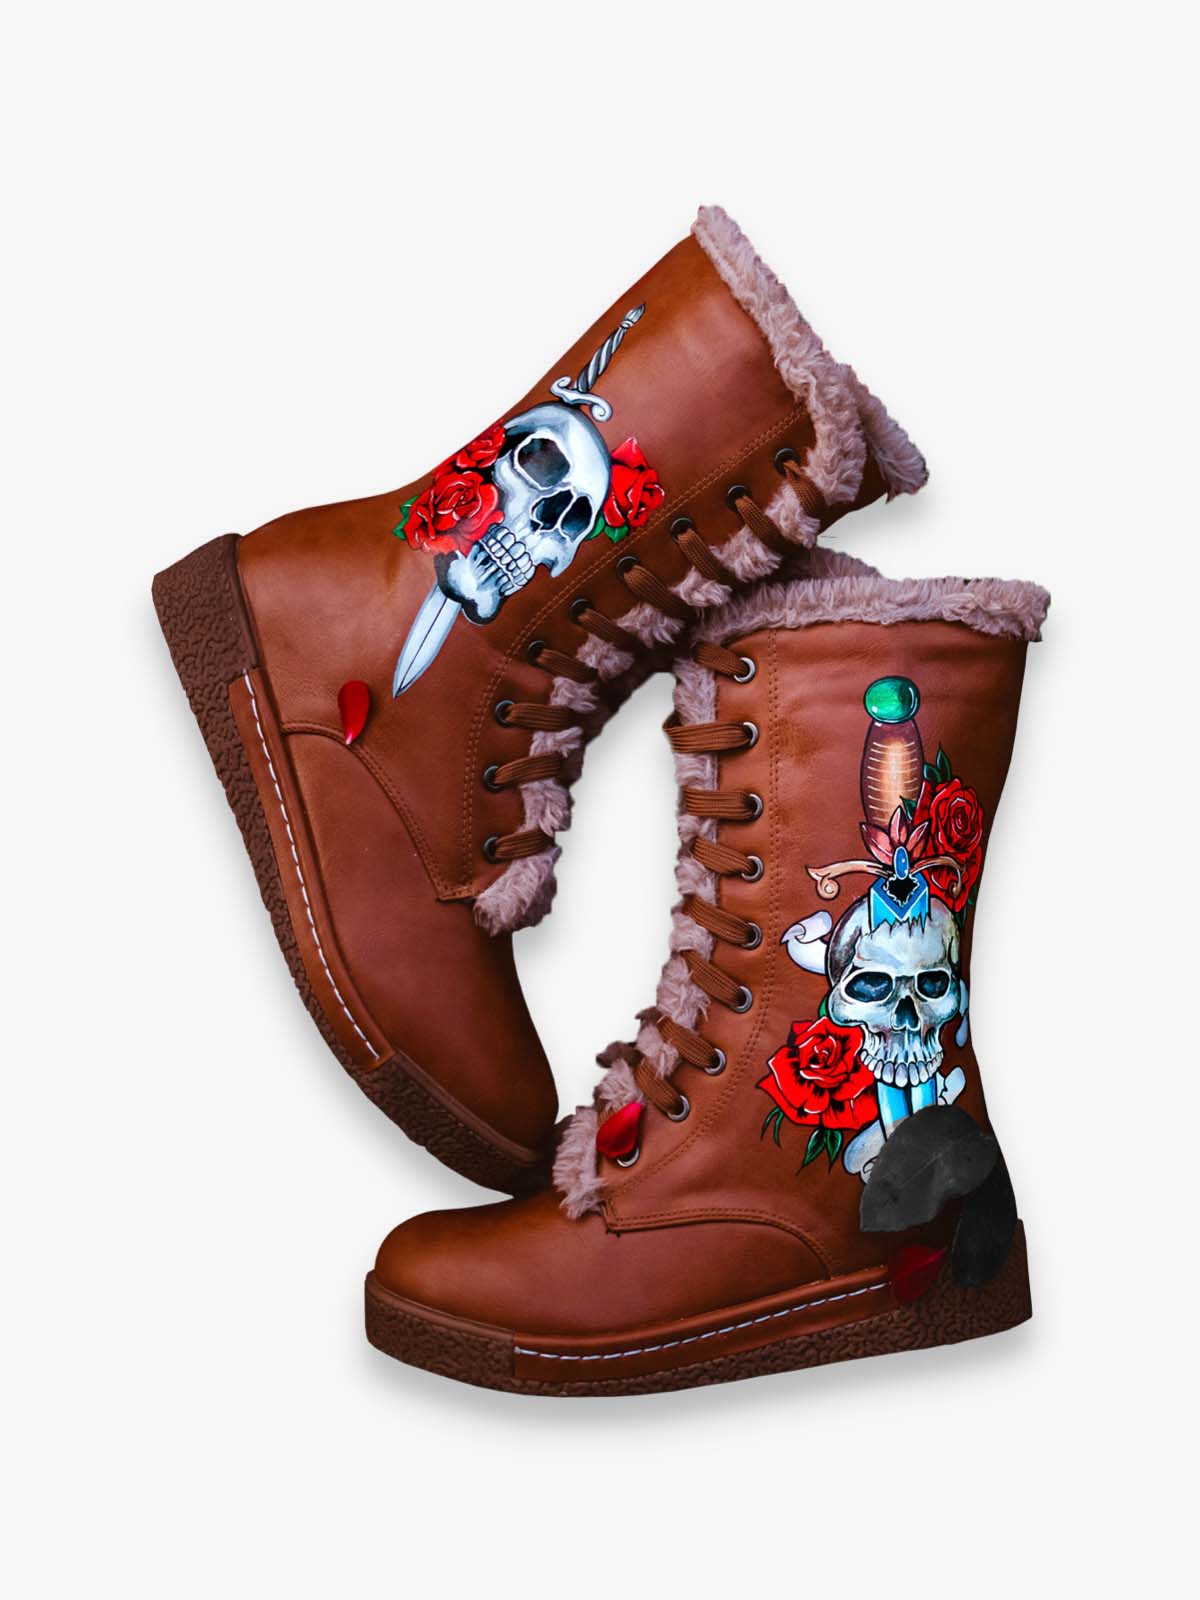 Skull & Roses Custom Boots (Commissioned)